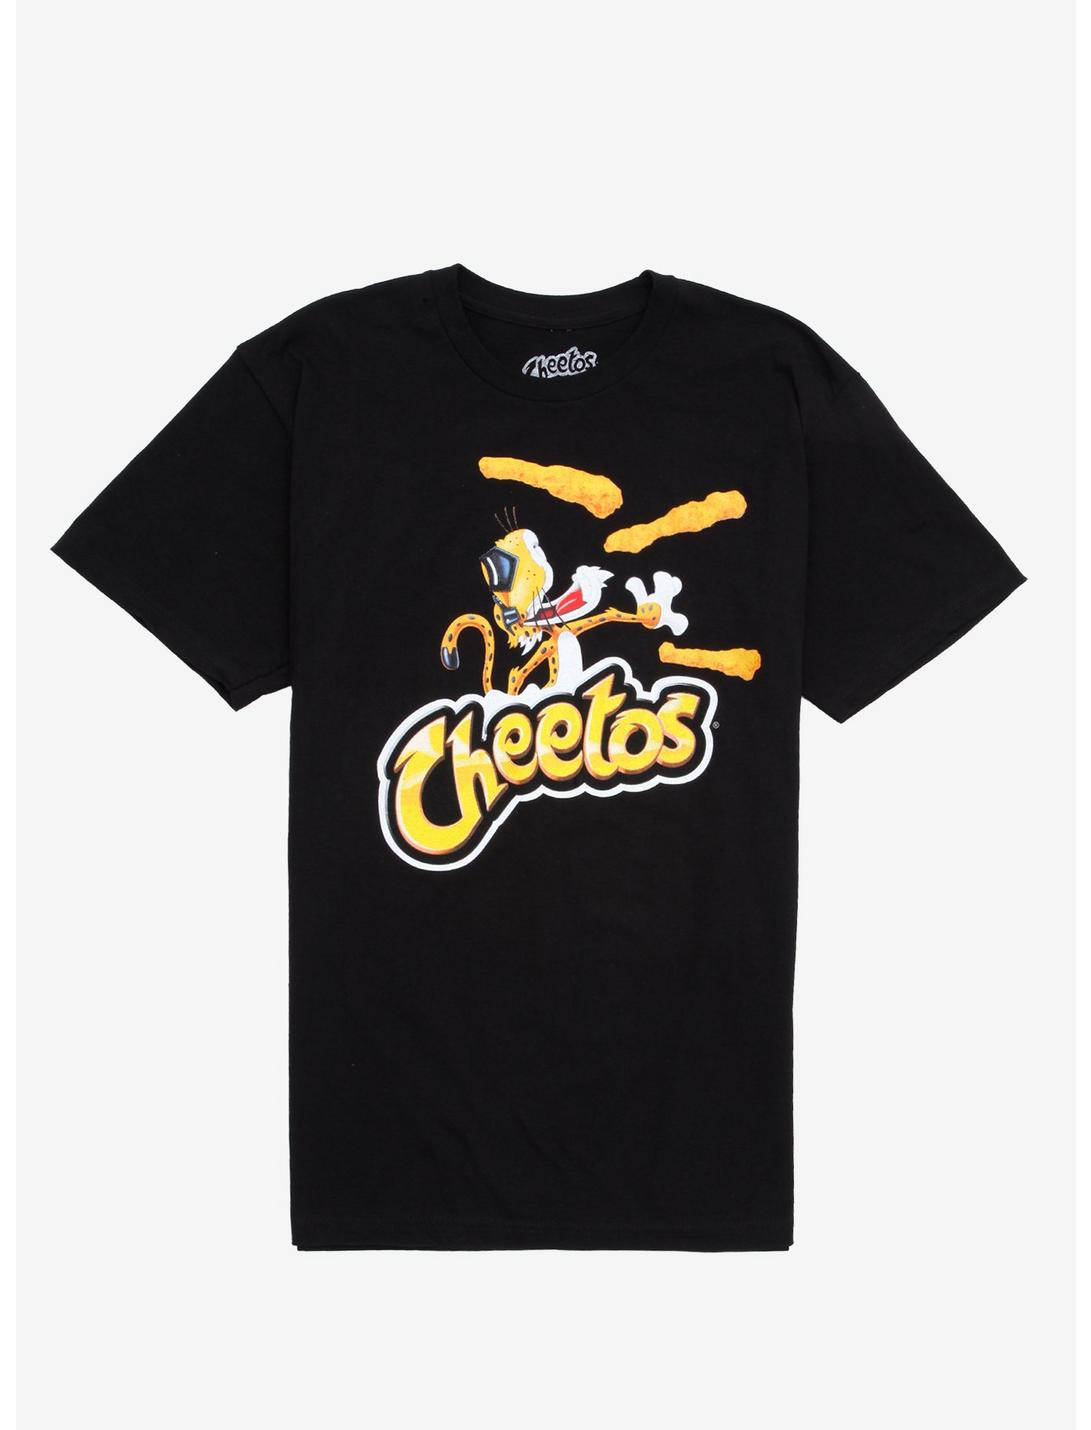 Cheetos Chester Snacking T-Shirt, BLACK, hi-res